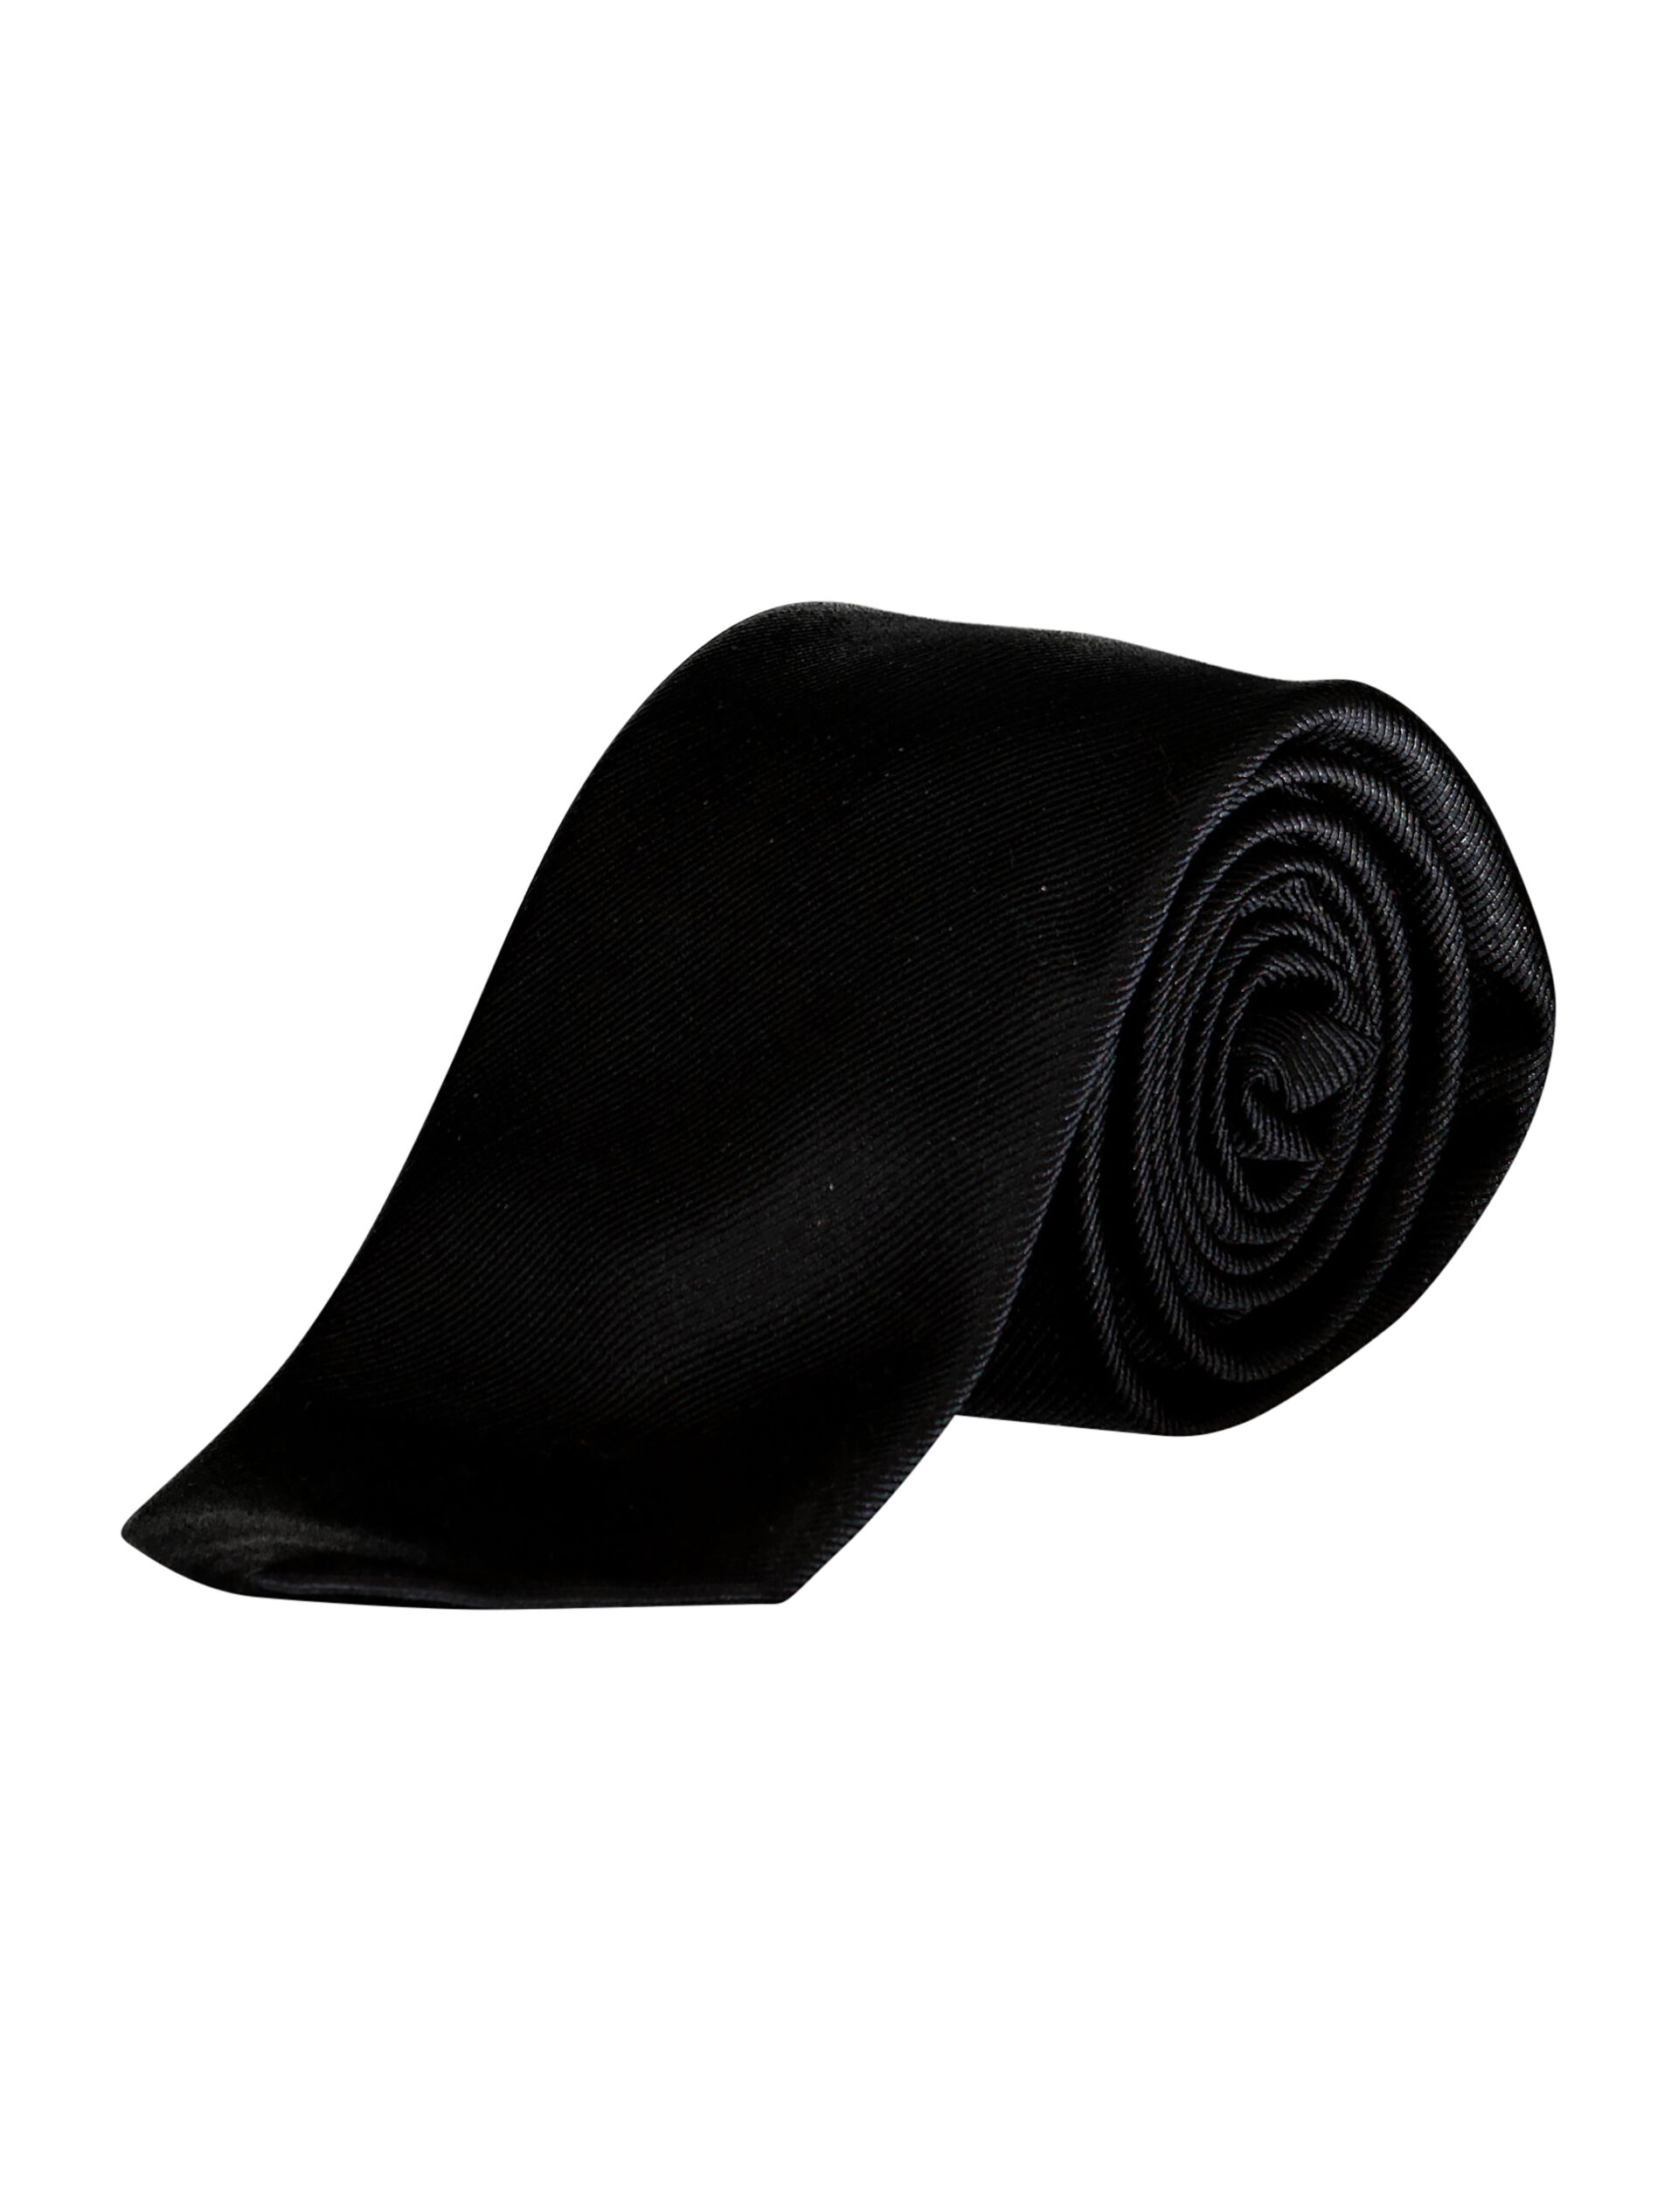 Tie Tie Black 90-900433